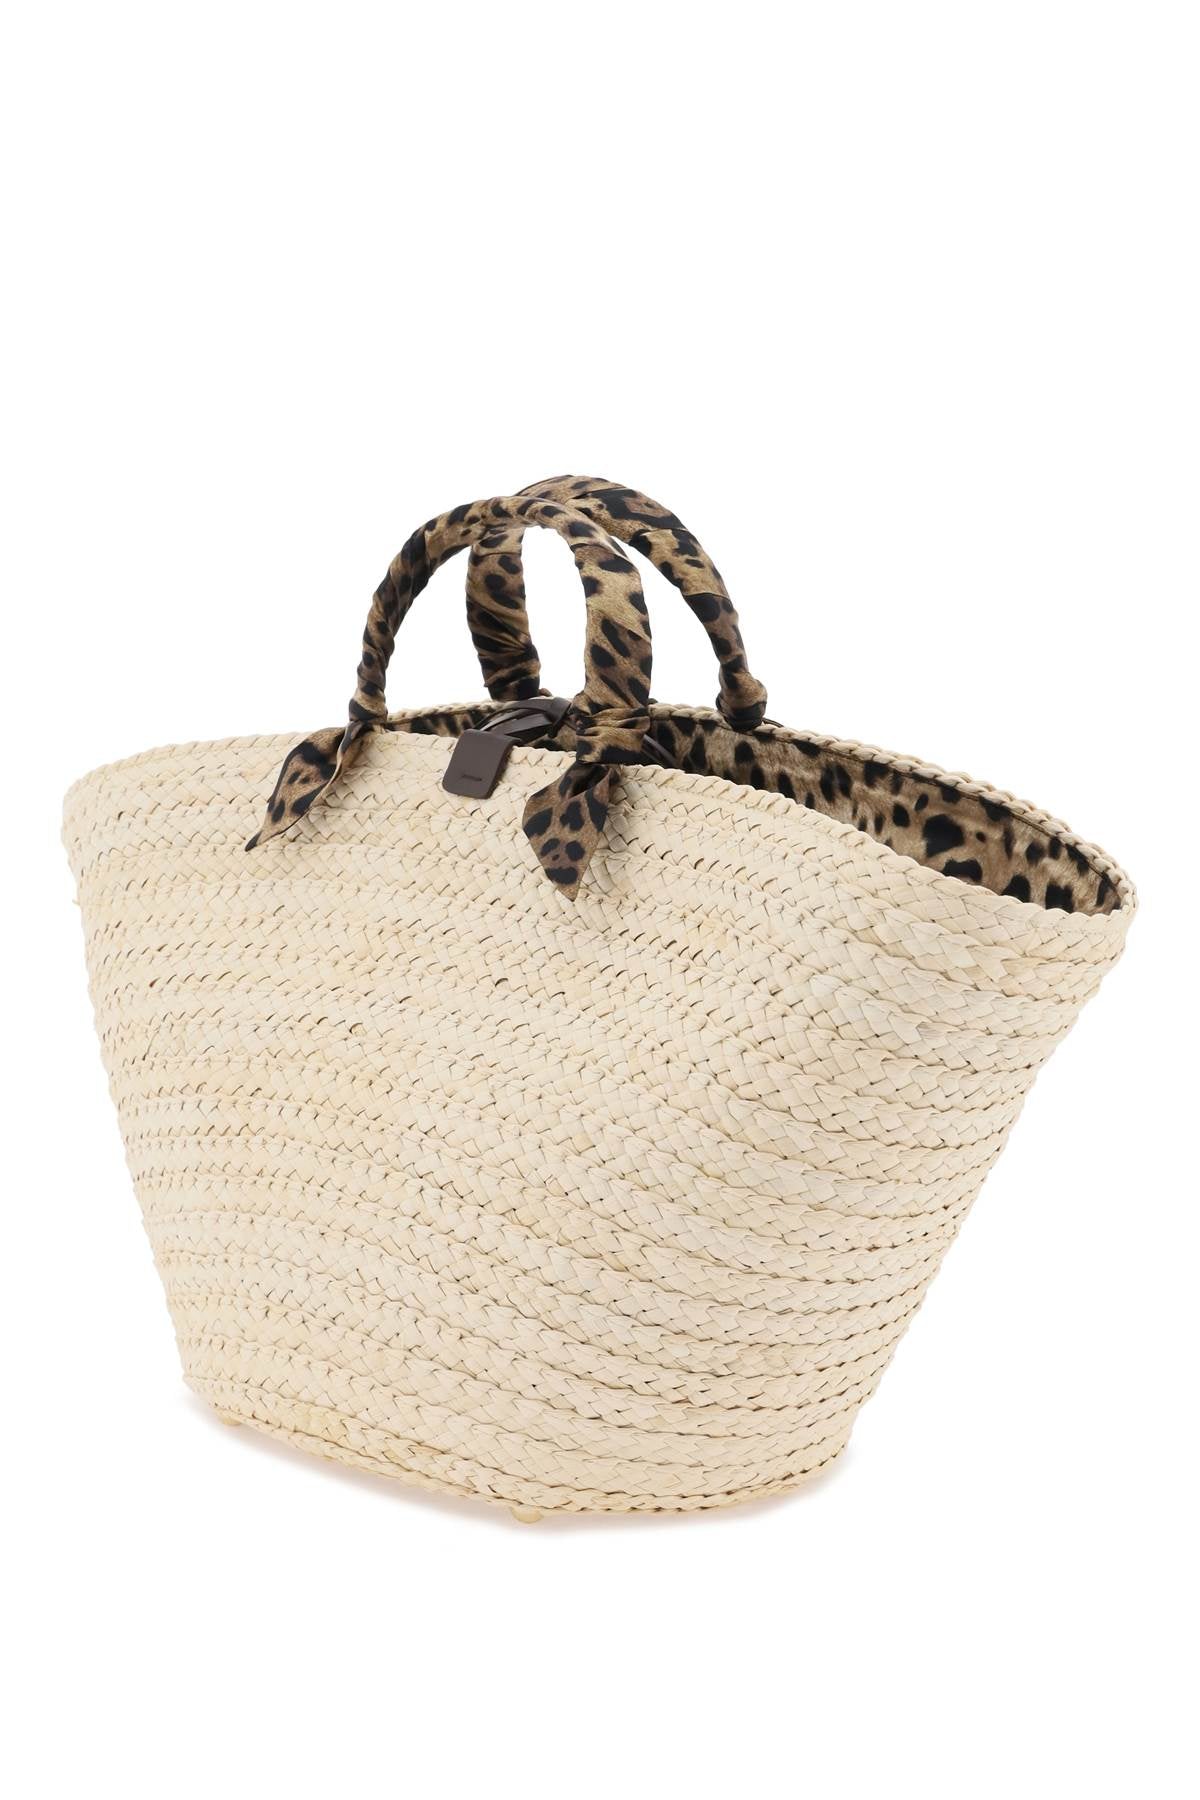 DOLCE & GABBANA Kendra Tote Handbag in Woven Straw with Leopard Print Silk Handles